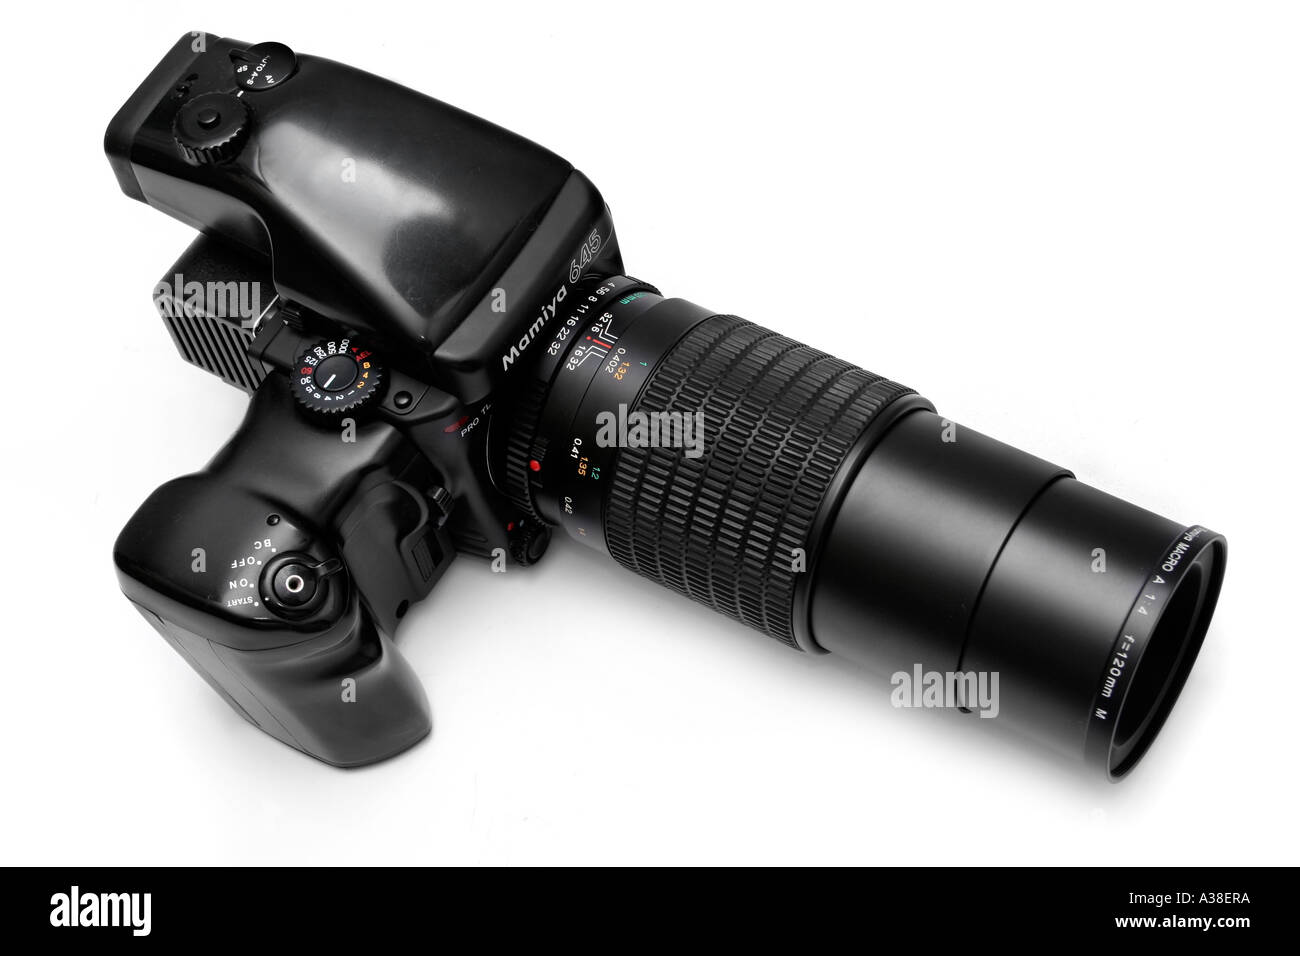 Mamiya 645 ProTL medium format 645 single lens reflex camera with Sekor 120mm macro lens Stock Photo